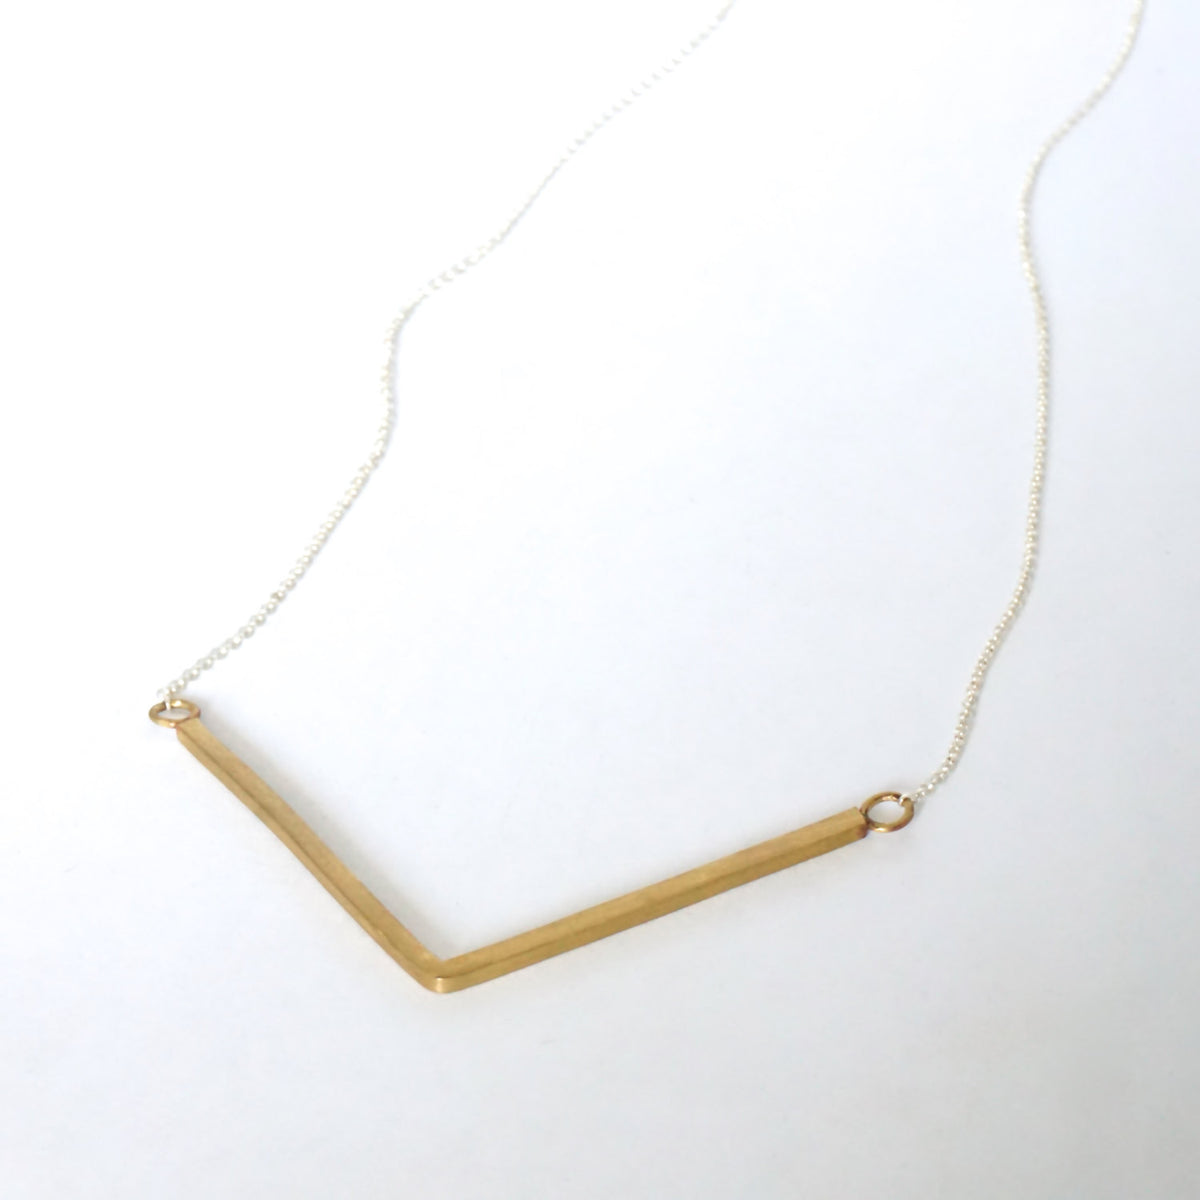 Elegant and Affordable Hand-Made "V" Chevron Necklace - 0156 - Virginia Wynne Designs